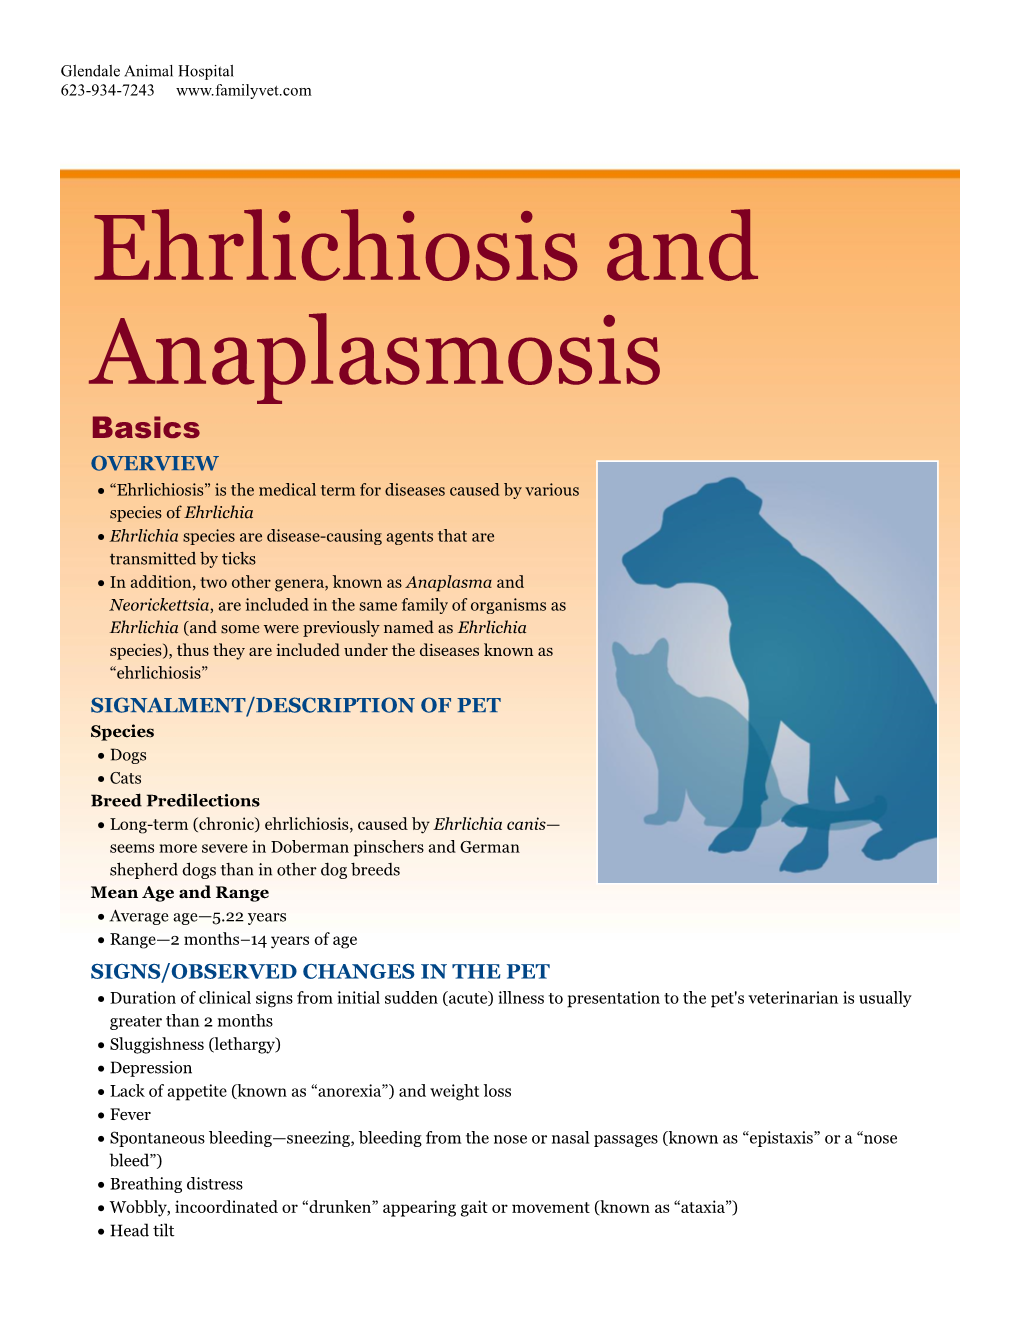 Ehrlichiosis and Anaplasmosis